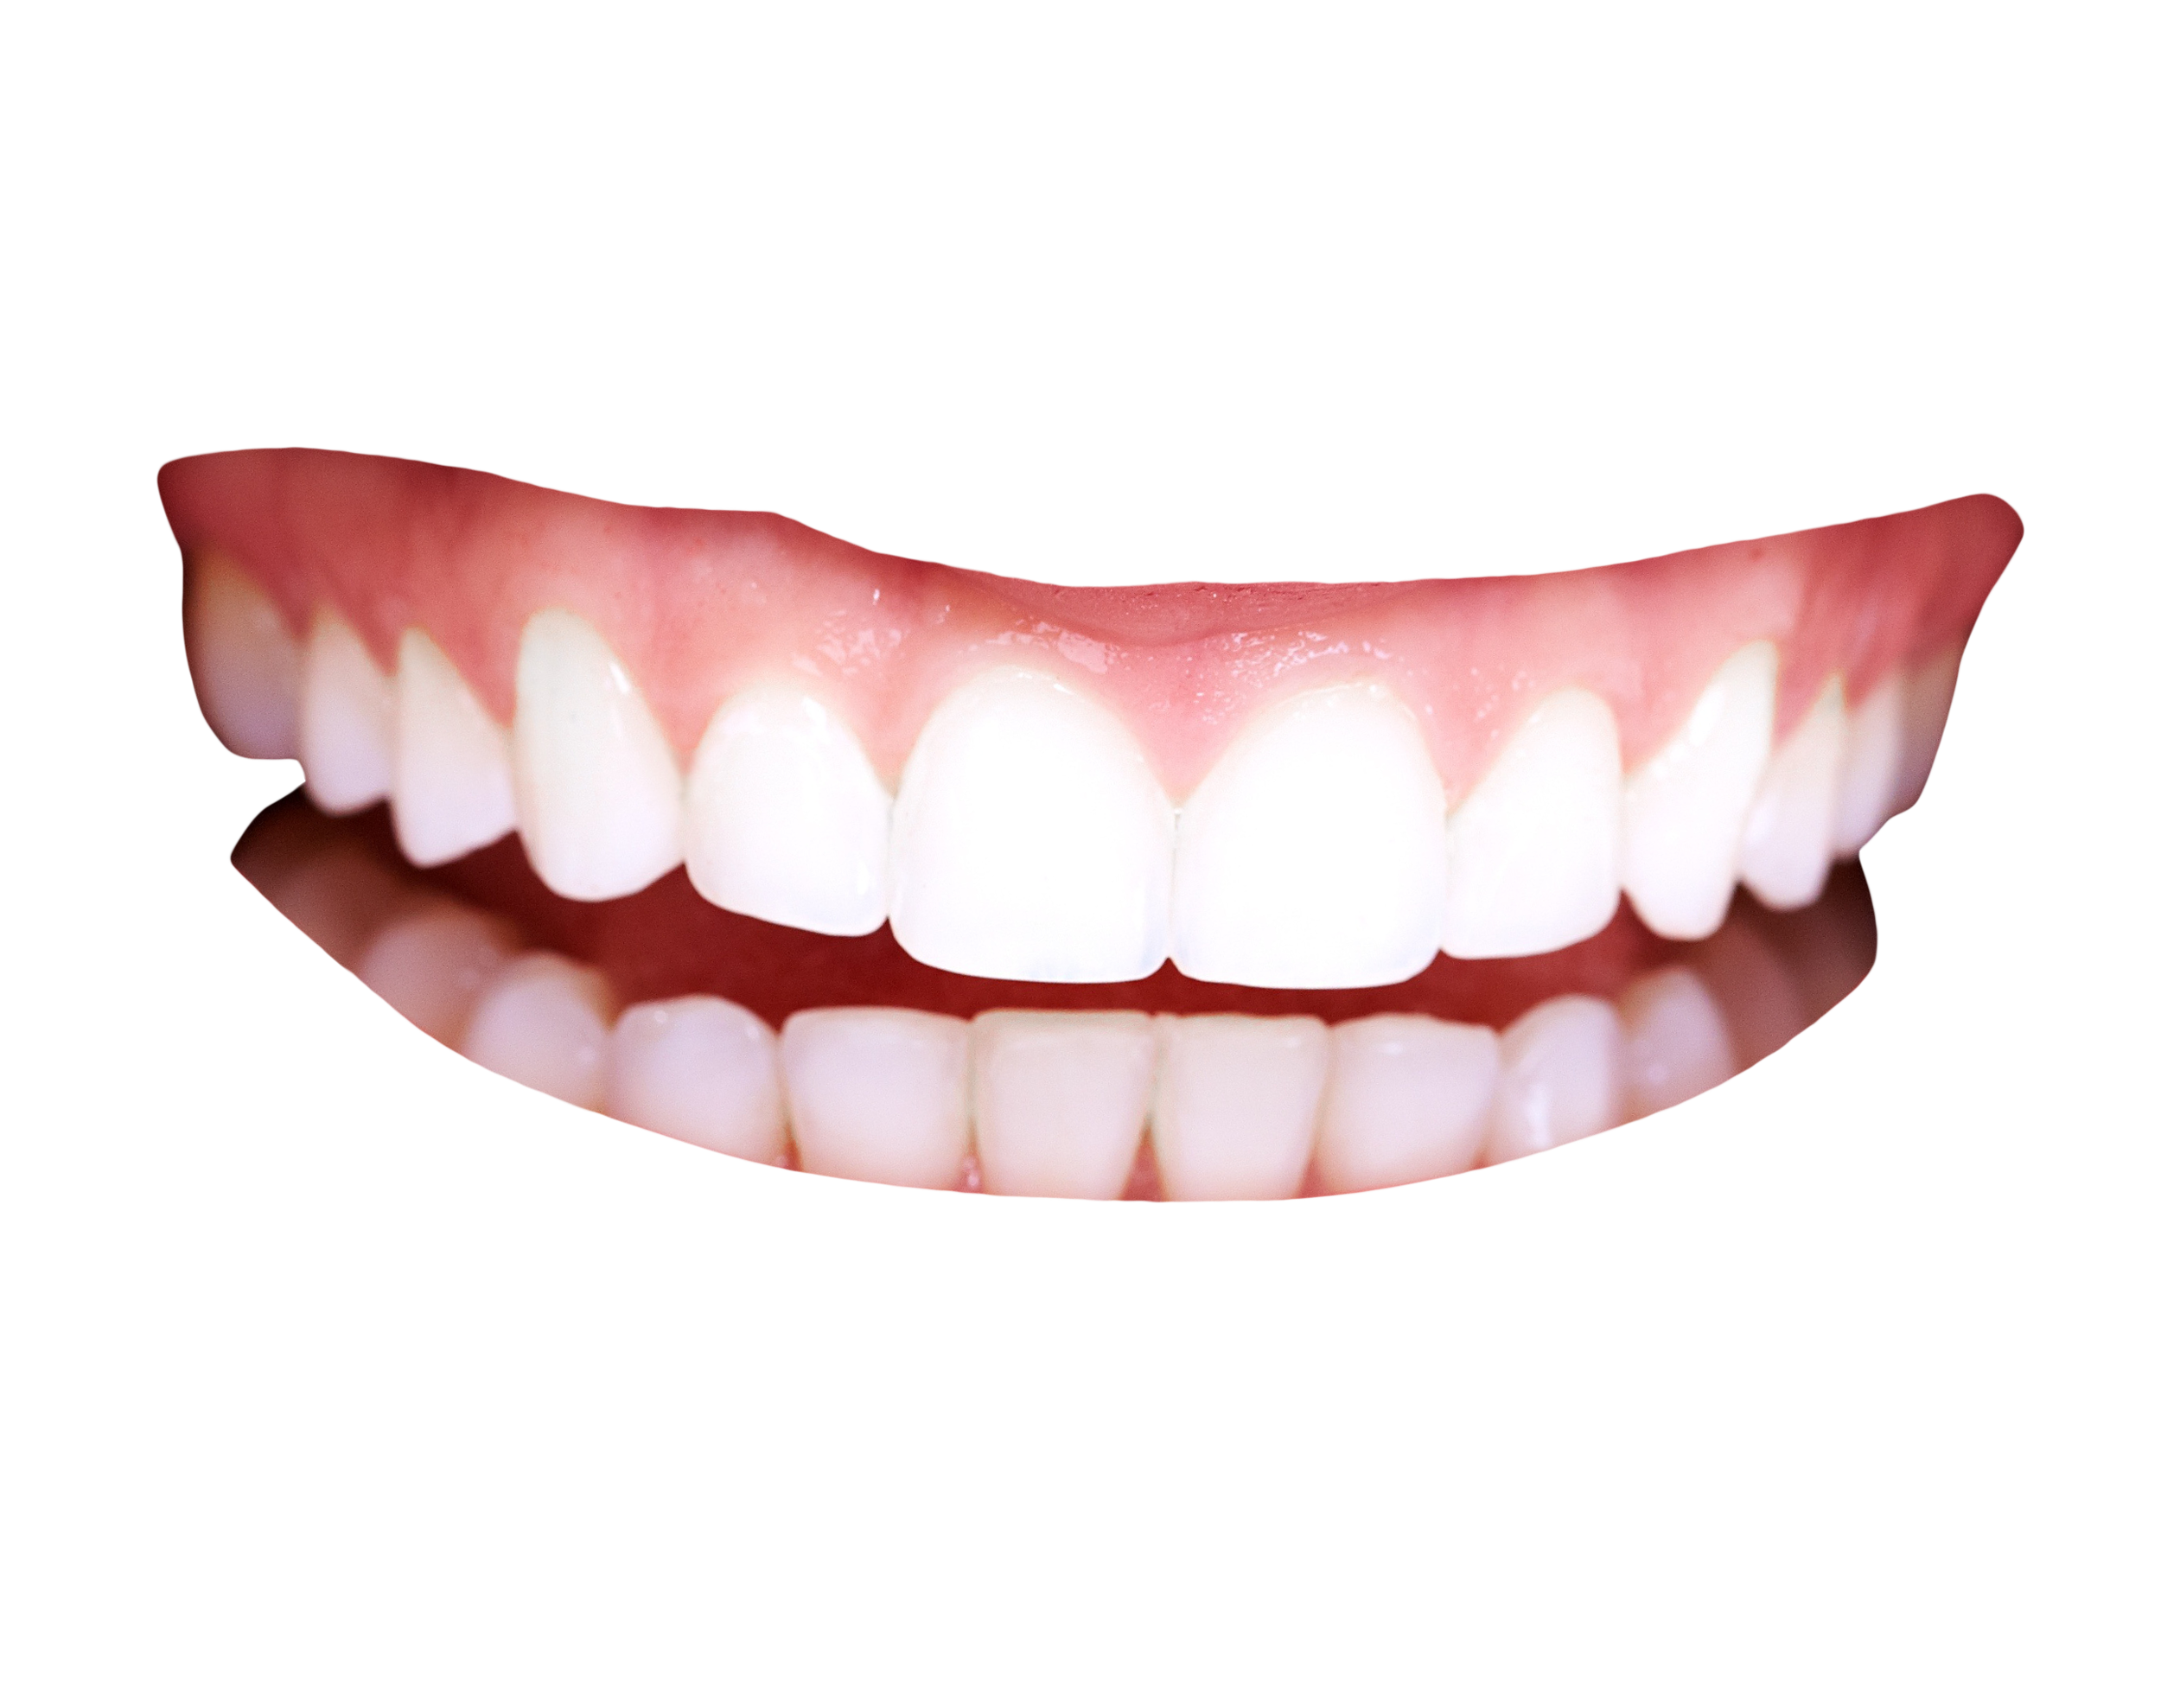 Teeth Smile Png Hd Transparent Teeth Smile Hdpng Images Pluspng